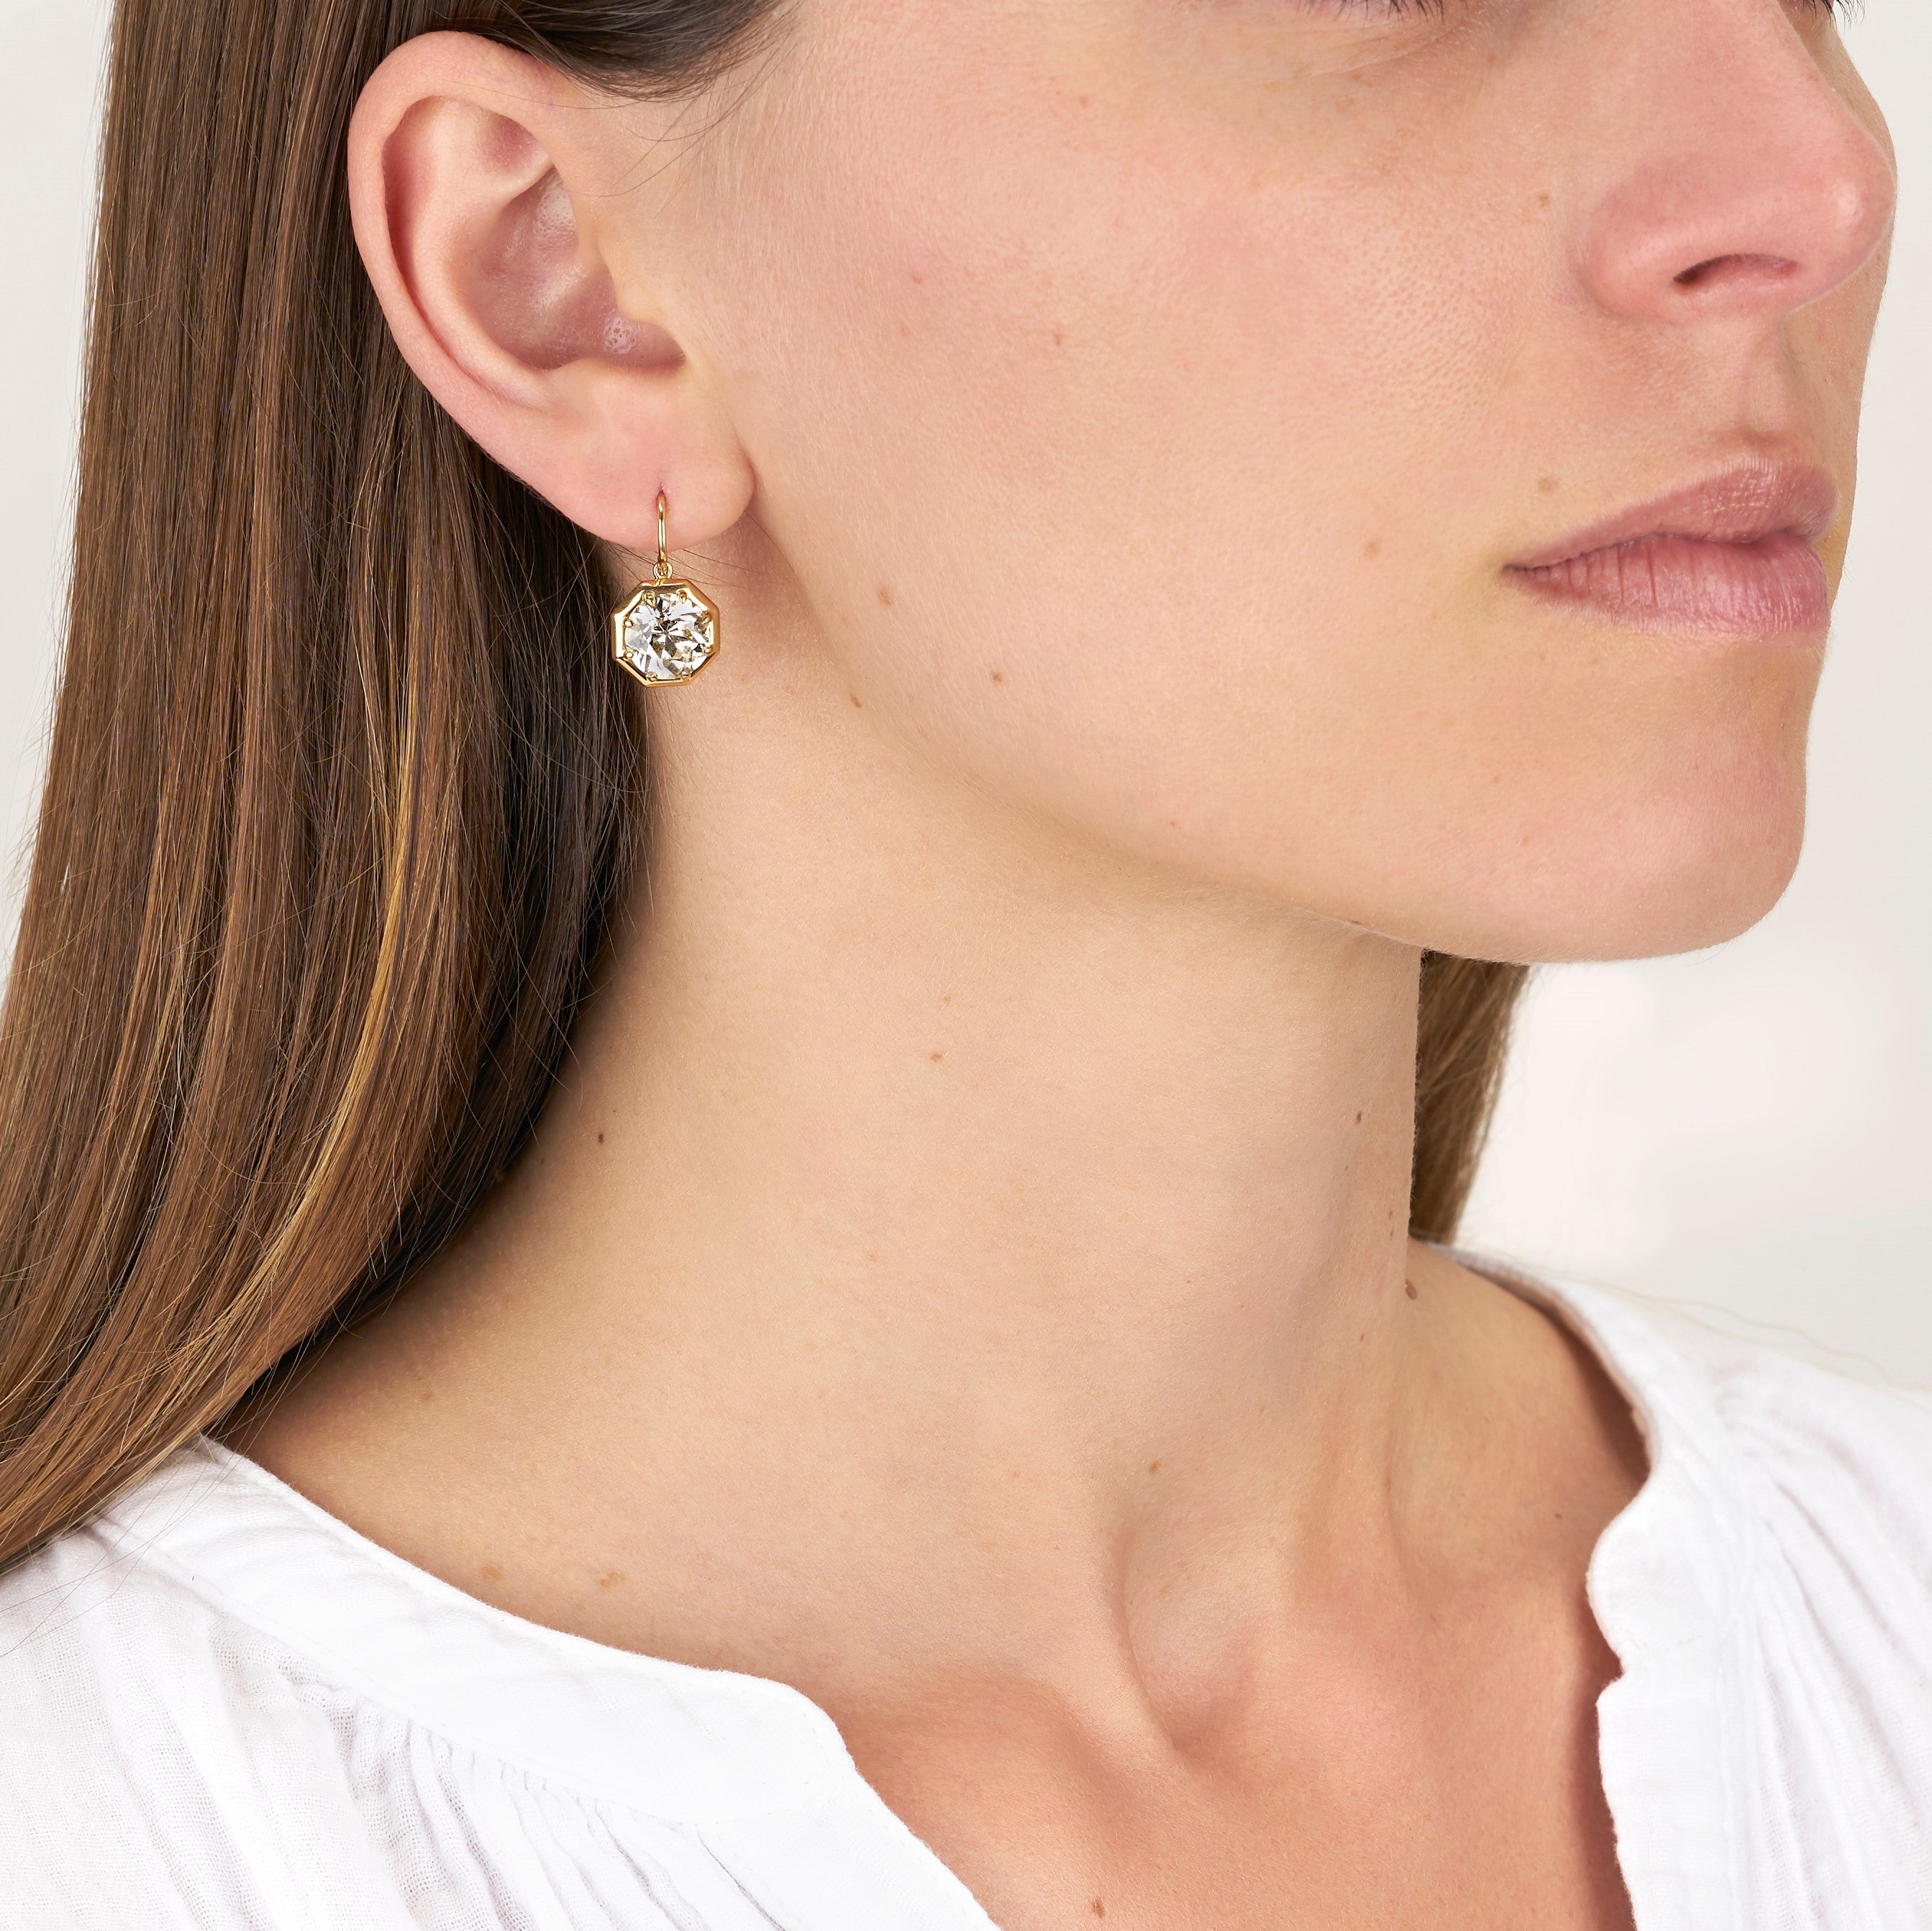 SINGLE STONE LOLA DROPS | Earrings featuring 6.61ctw O-R/VS2-SI1 GIA certified old European cut diamonds prong set in handcrafted 18K yellow gold drop earrings.